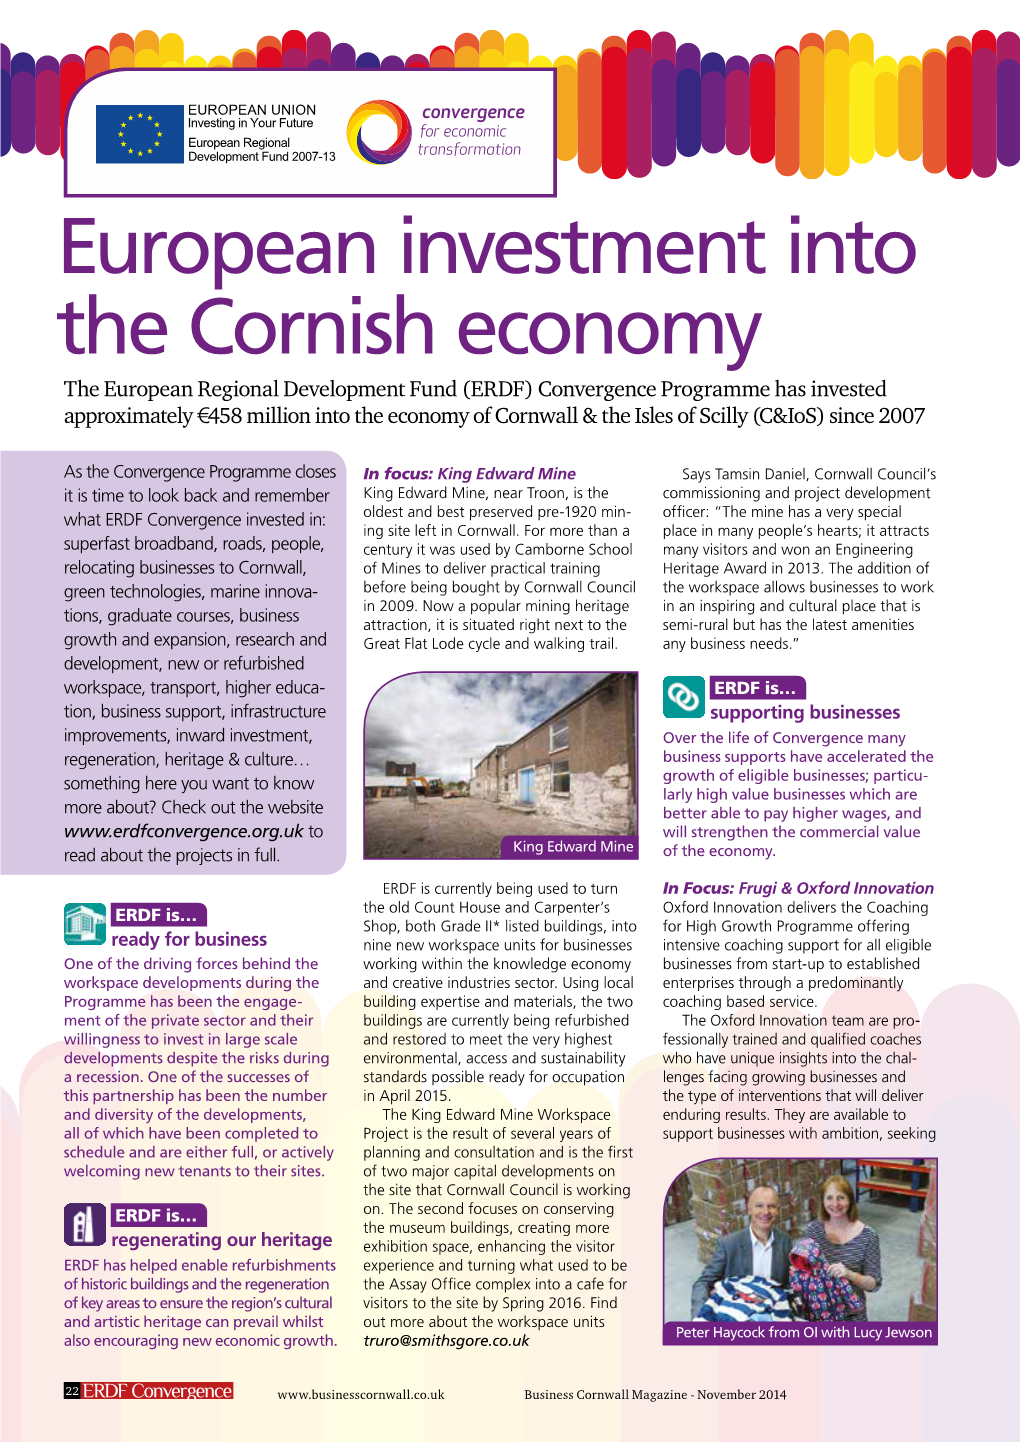 European Investment Into the Cornish Economy